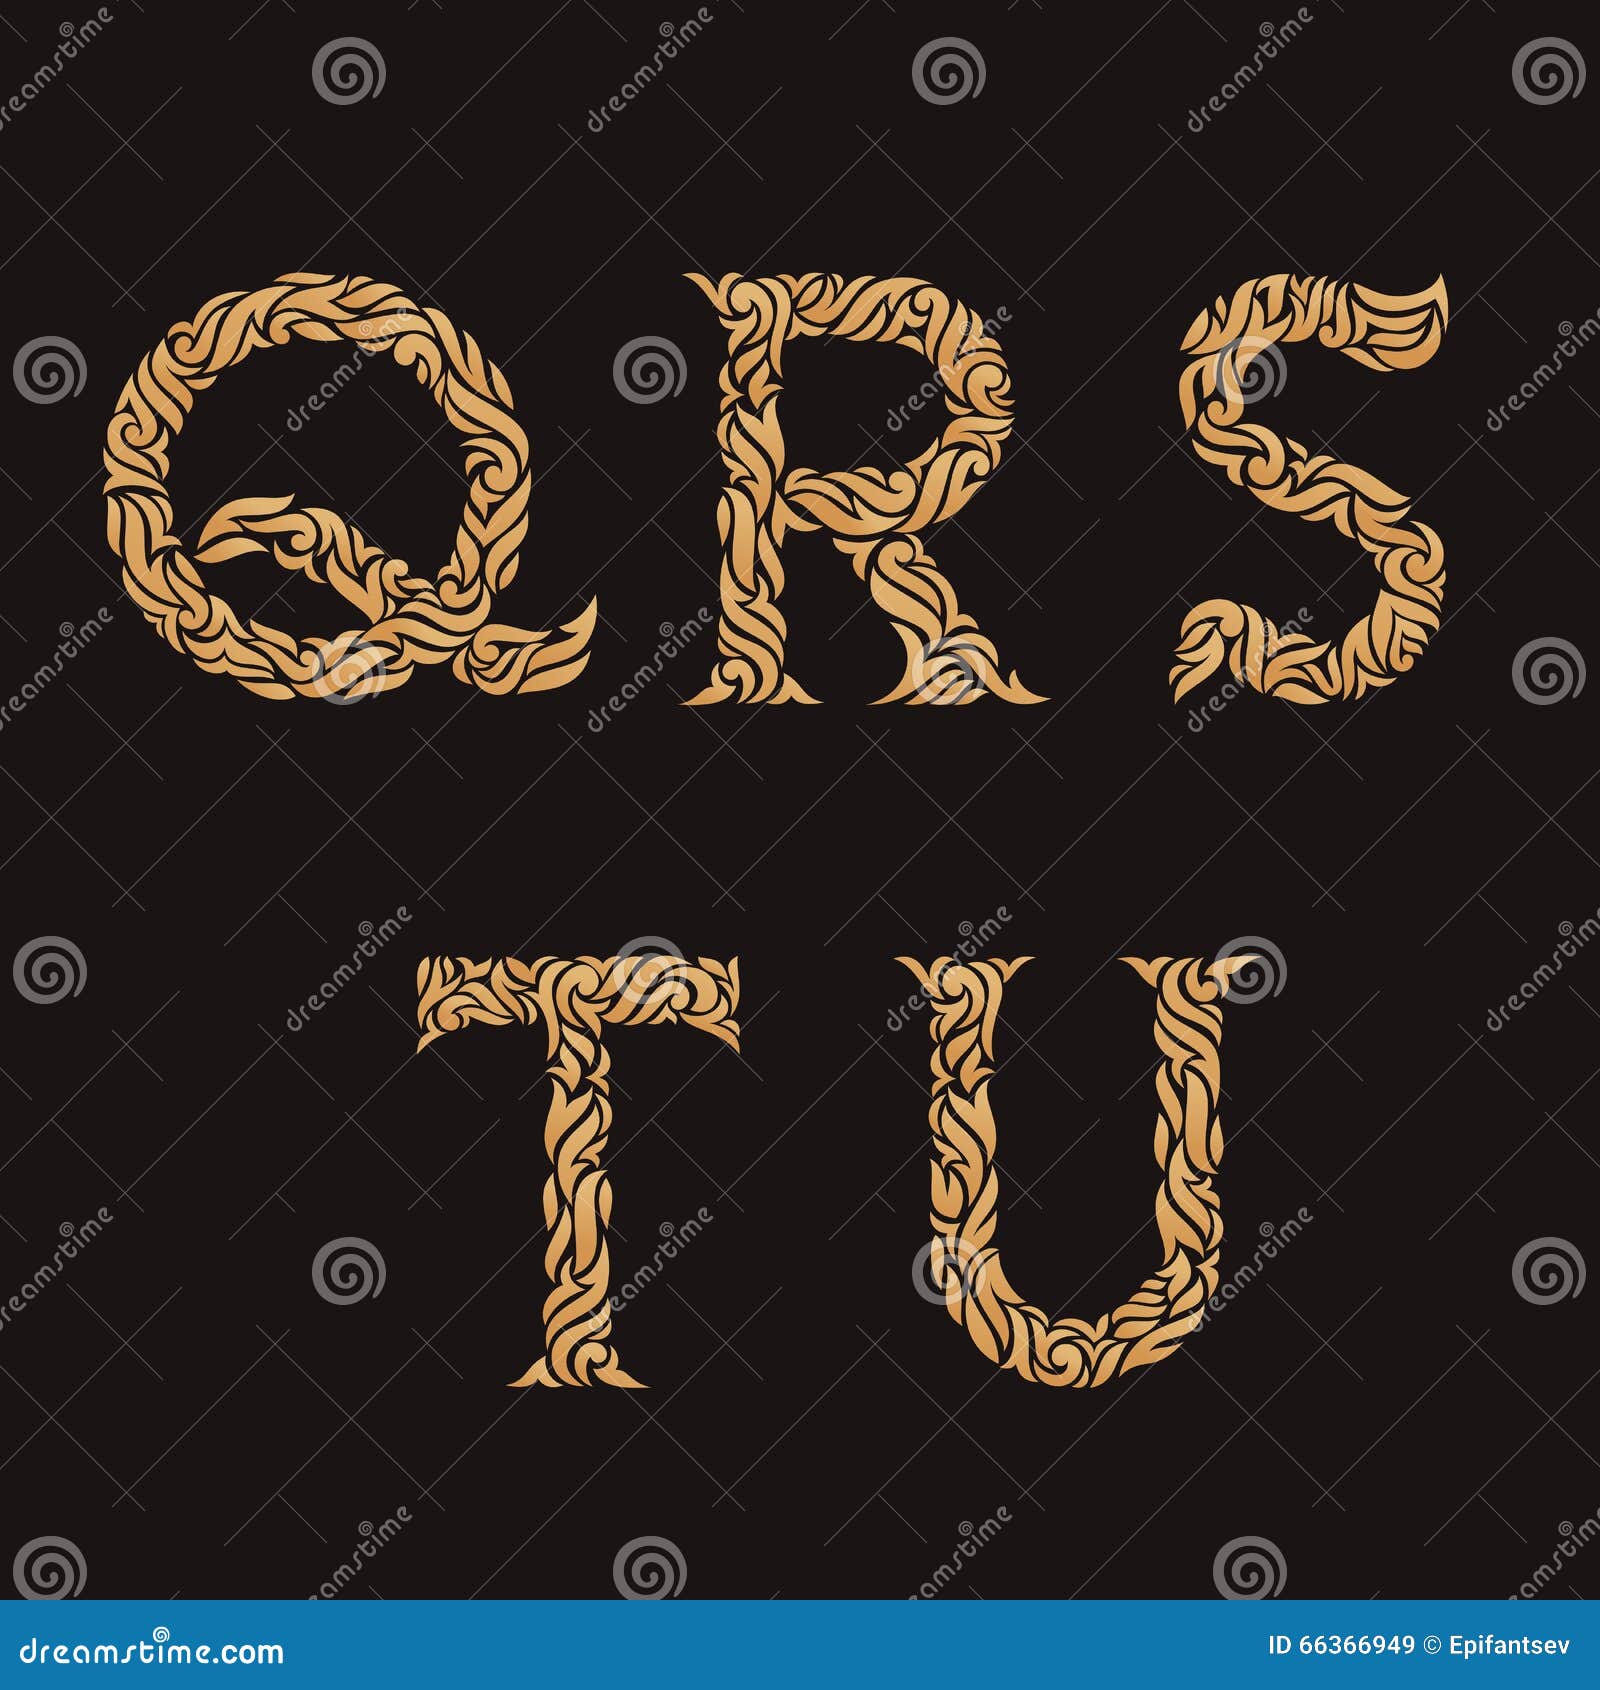 Decorative Initial Letters Ornate Golden Monograms